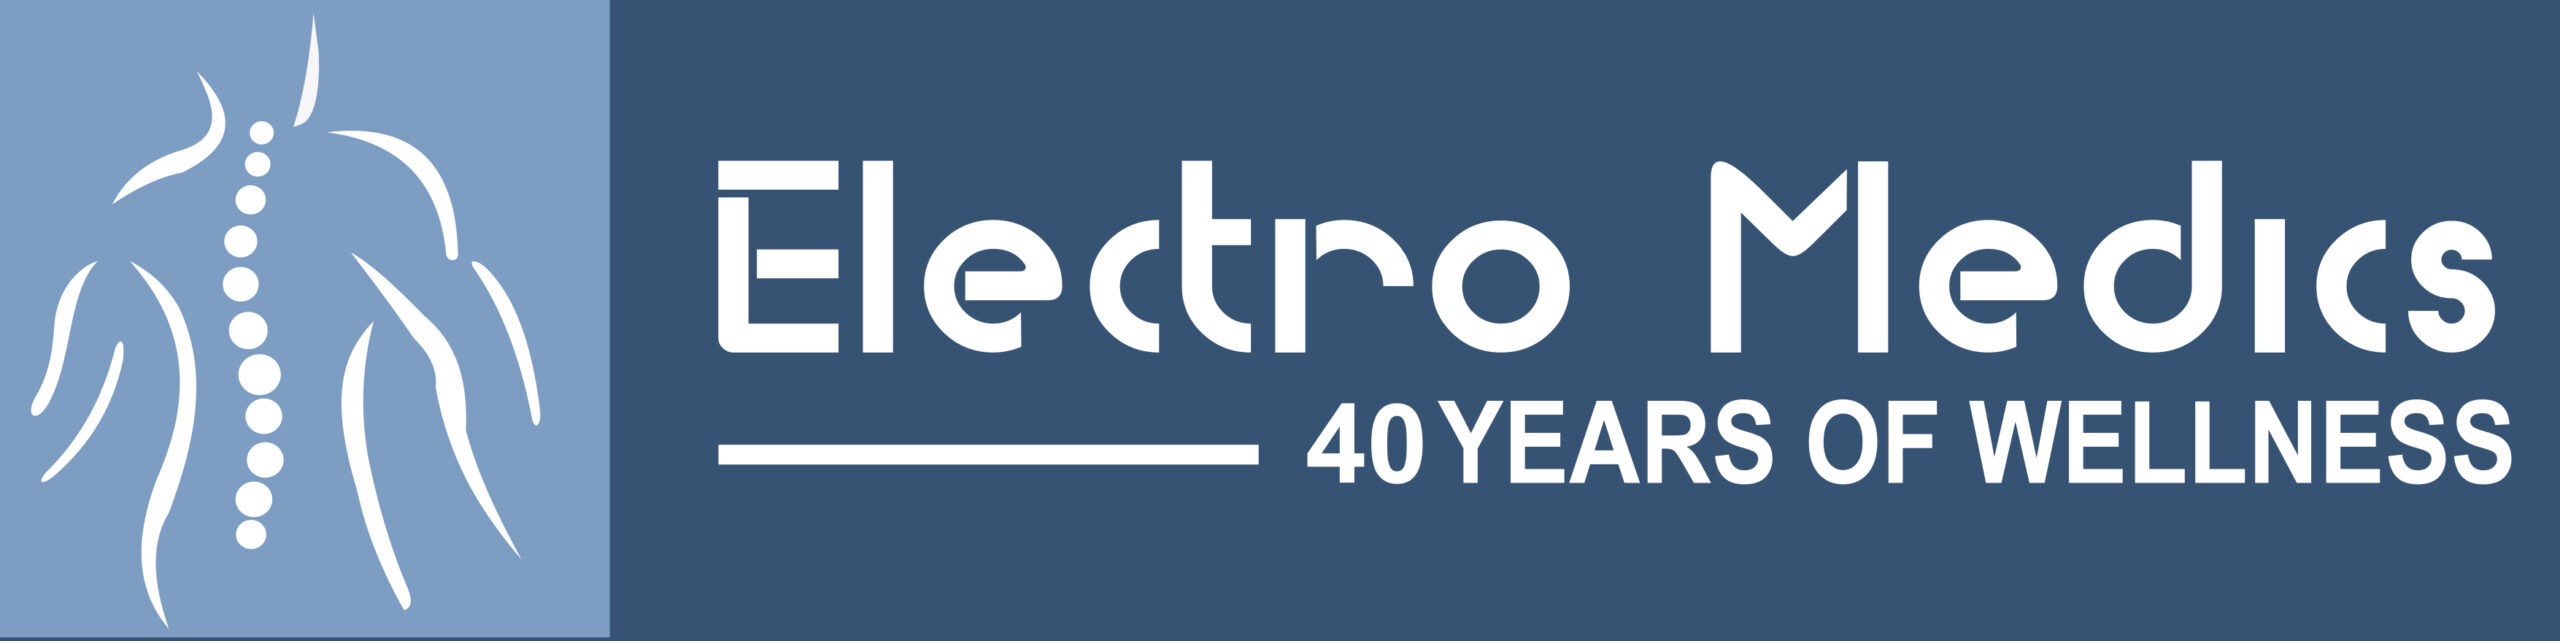 Electro Medics - 40 years of wellness